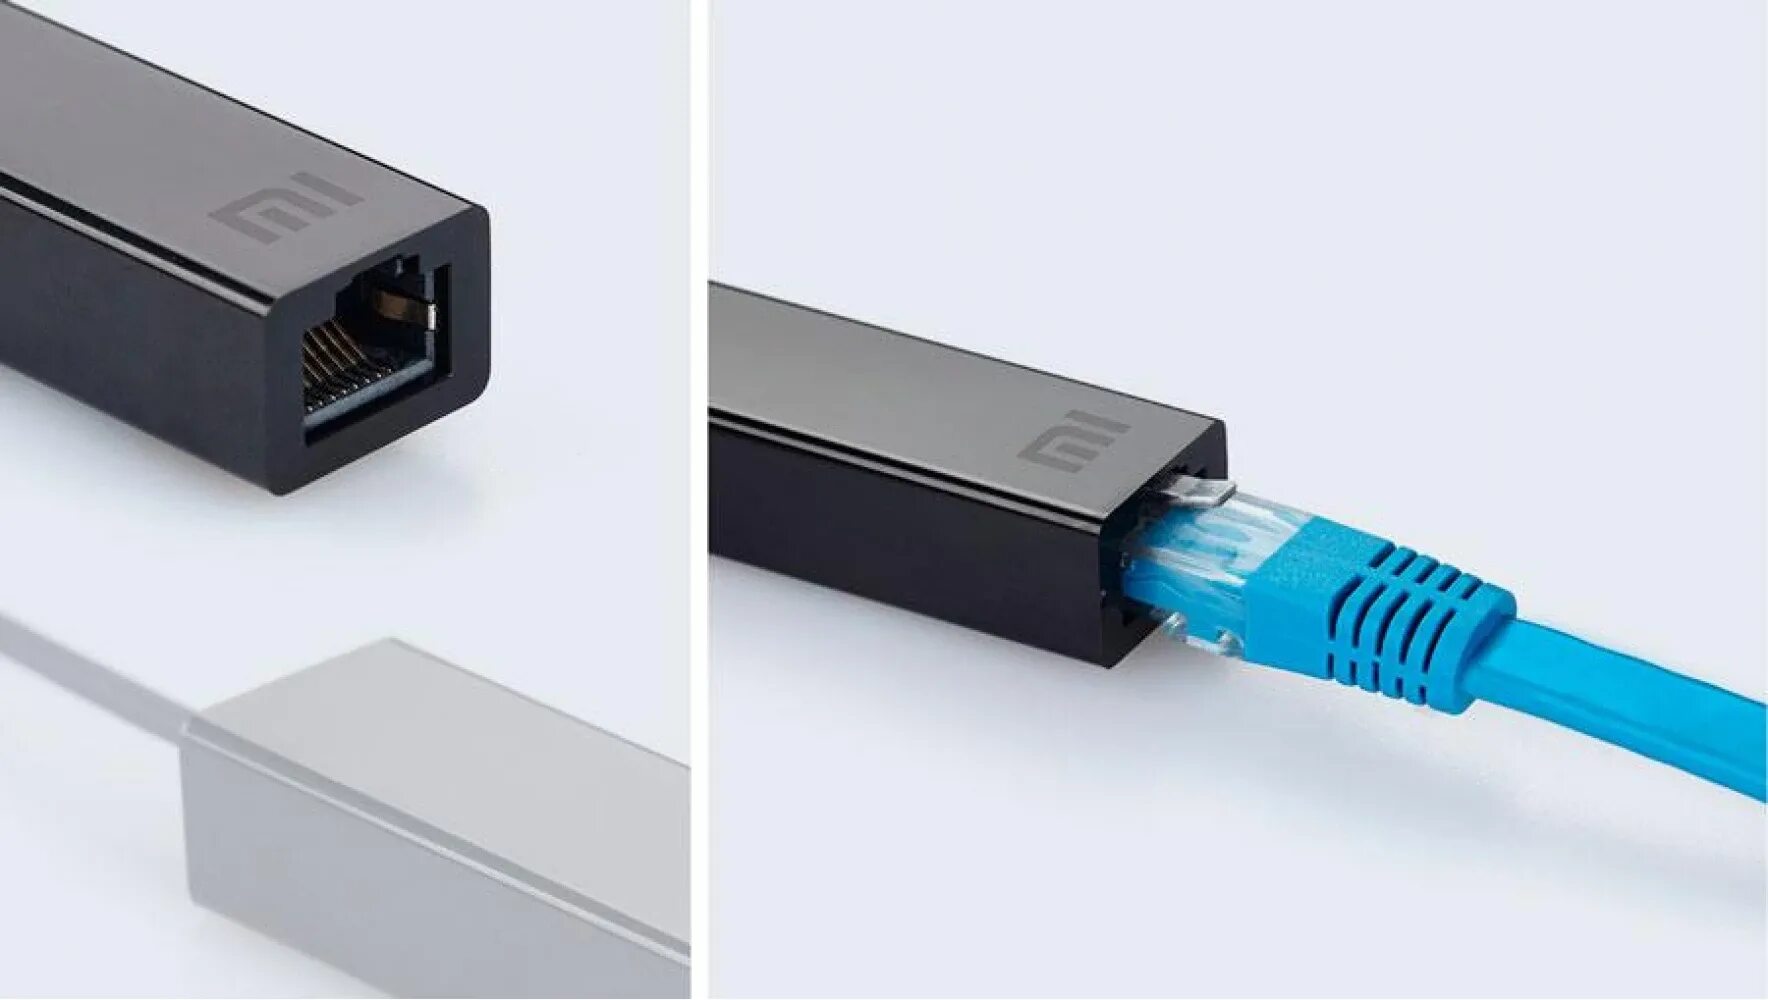 Сетевое подключение usb. USB lan rj45 адаптер для модема. Переходник USB rj45 Ethernet. Сетевой адаптер lan USB - Ethernet rj45 10/100 Мбит/с 15см. USB 2.0/rj45 10/100m Ethernet.